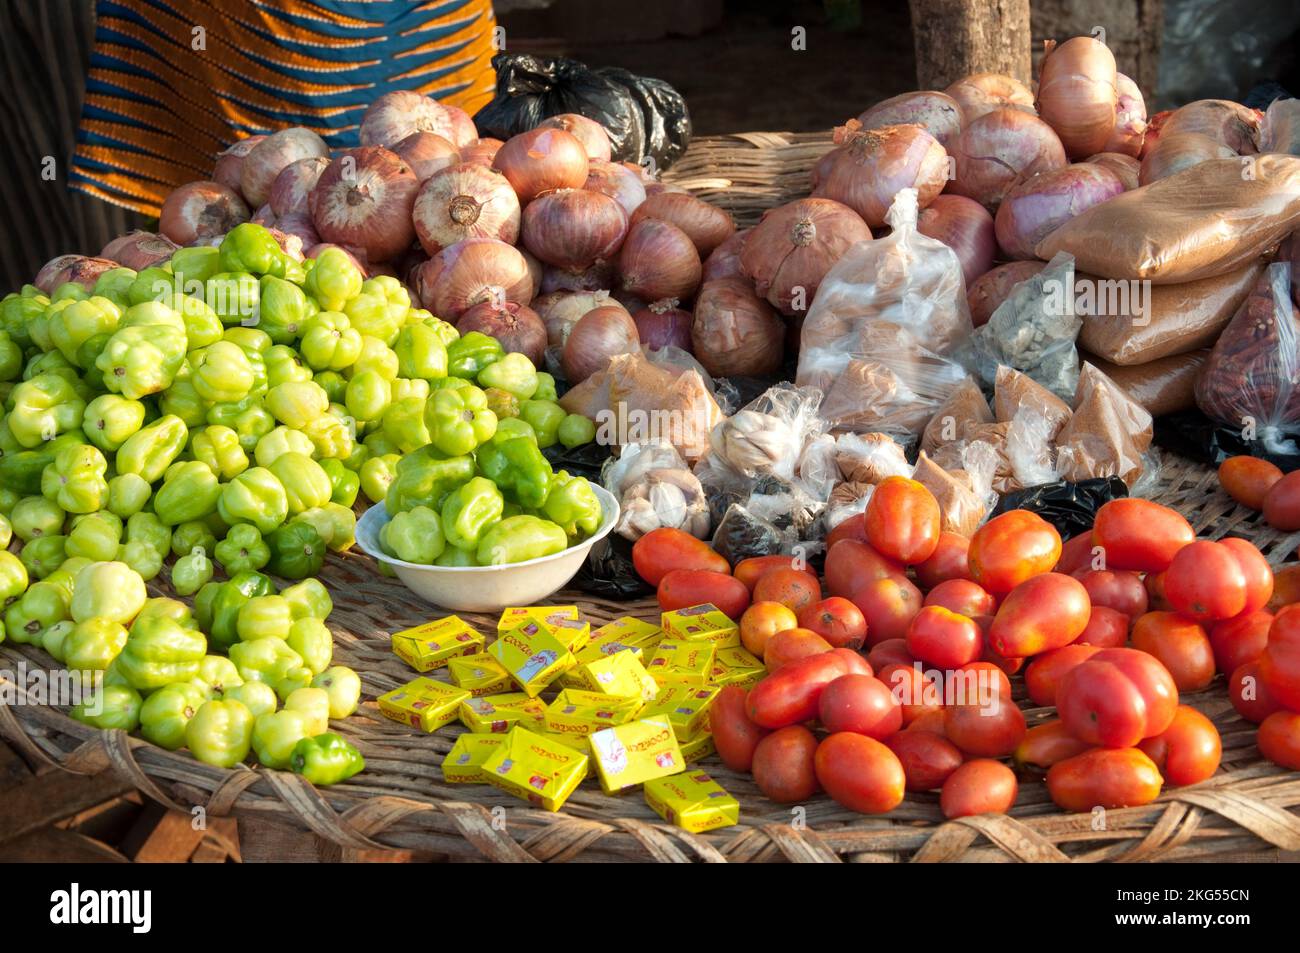 Vegetable stall, roadside market, Azove, Cuffo, Benin Stock Photo